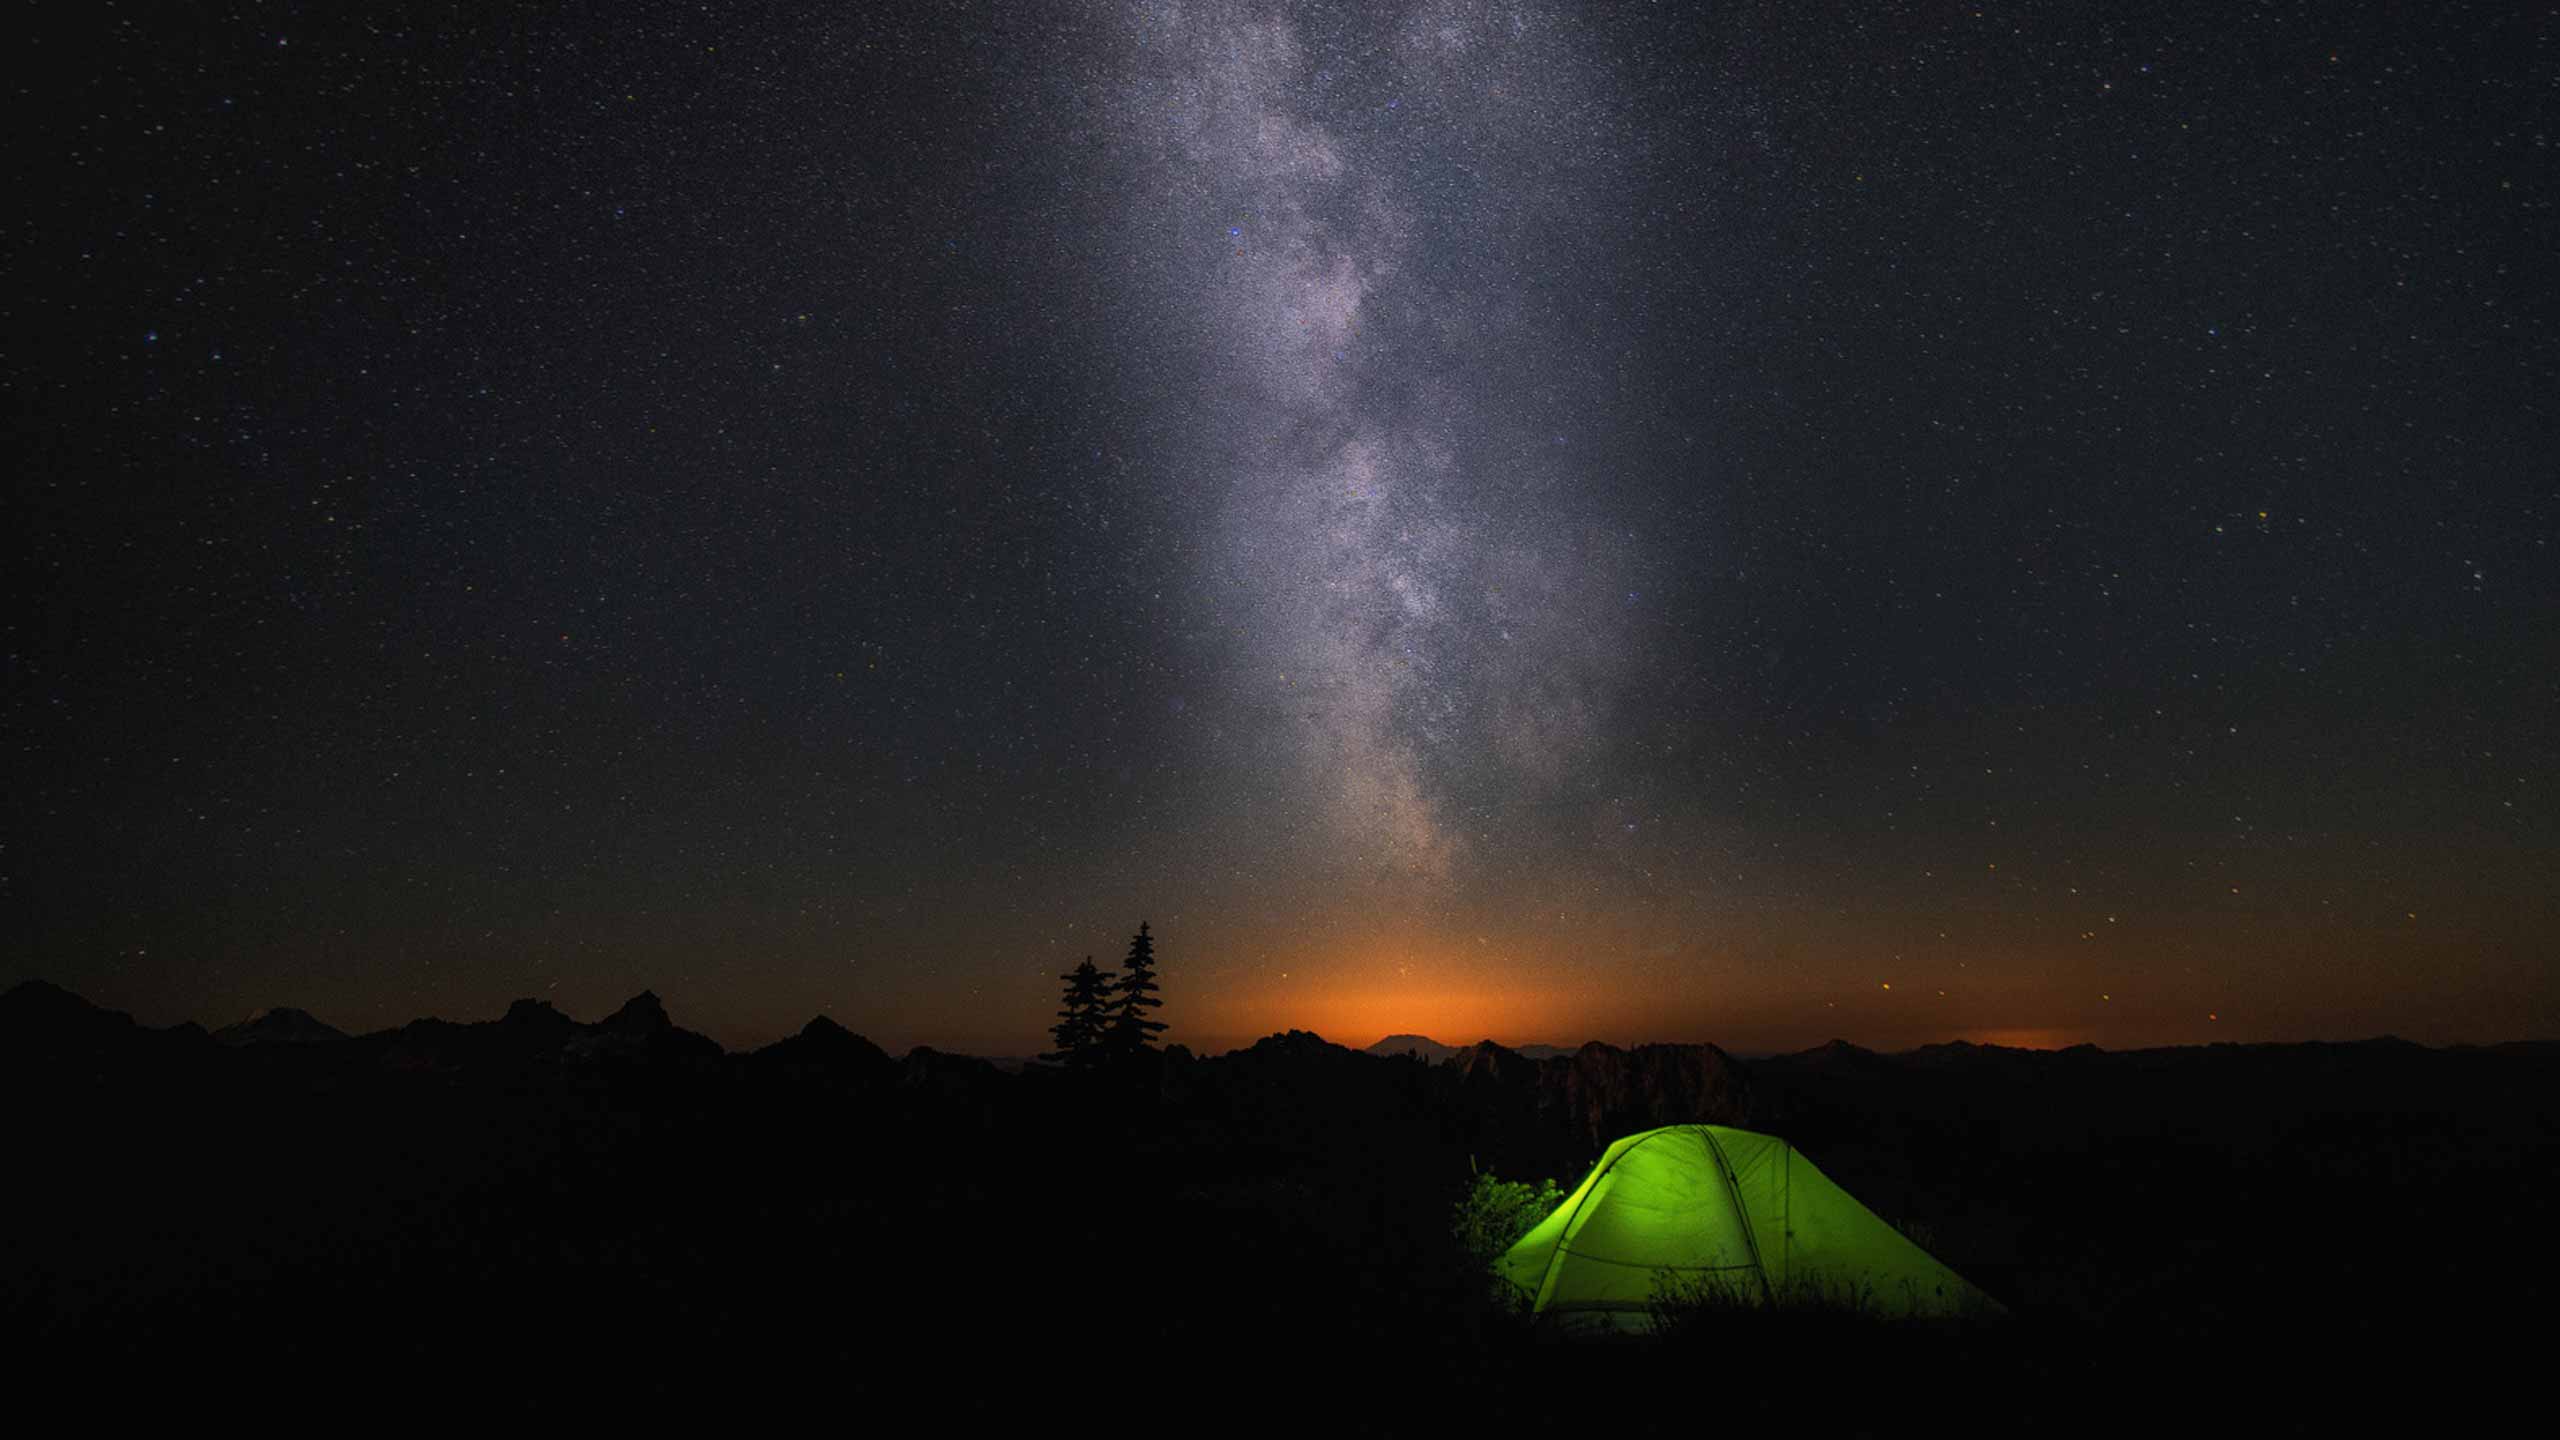 A green tent below the Milky Way in a dark night sky